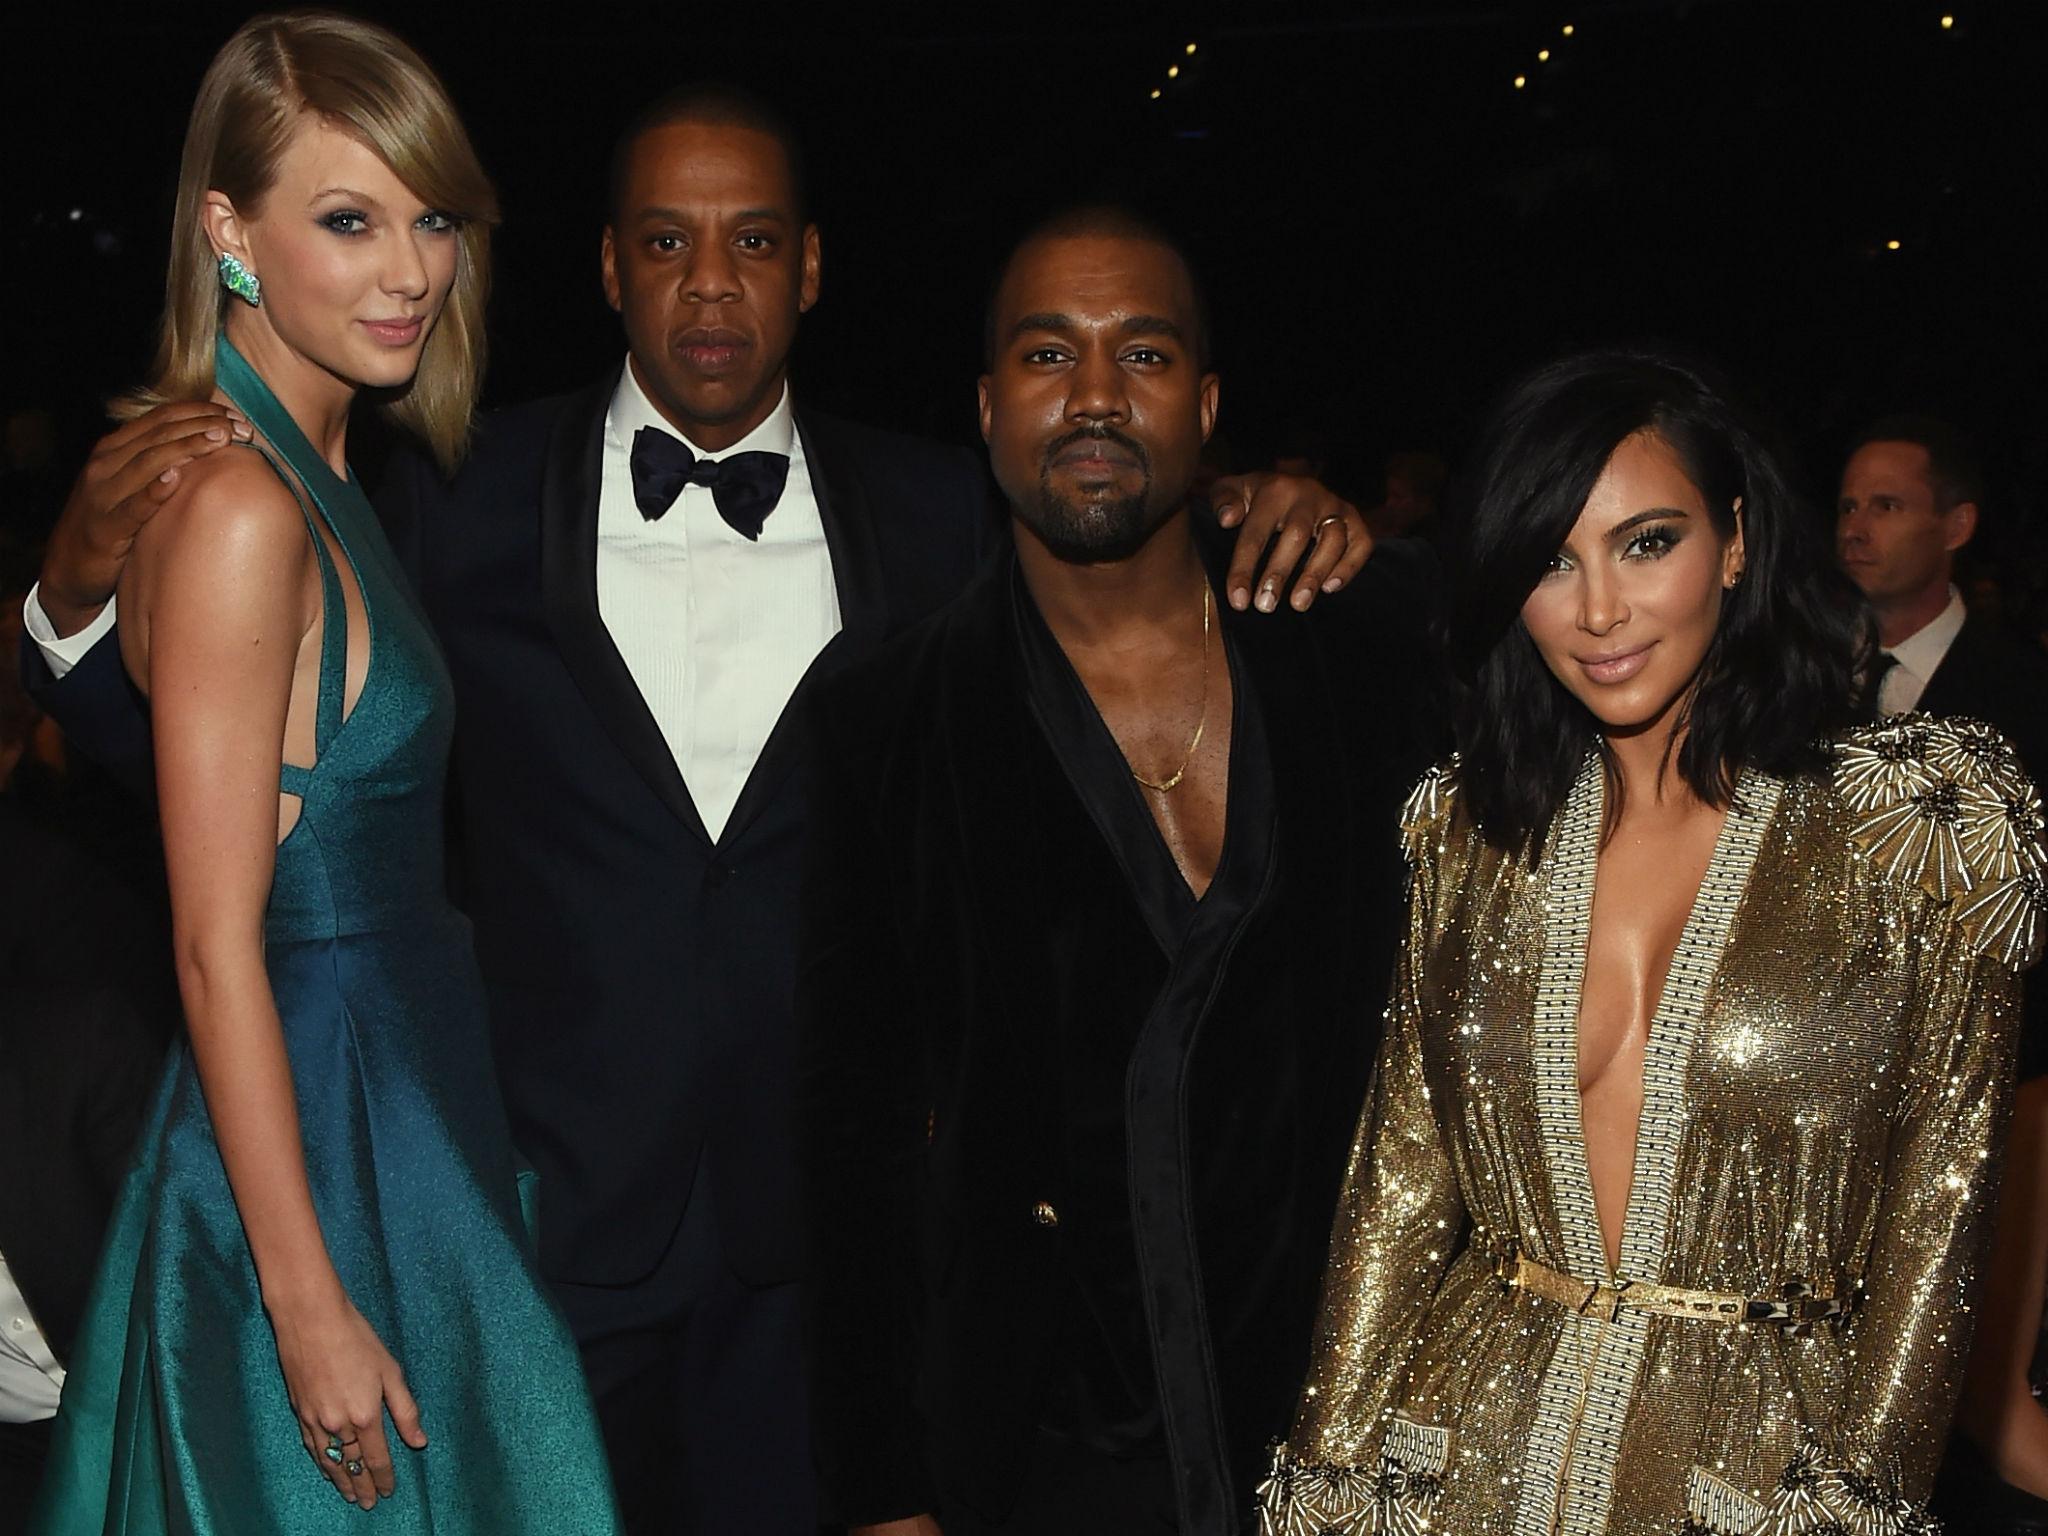 Taylor Swift, Jay Z, Kanye West and Kim Kardashian at the 2015 Grammy awards